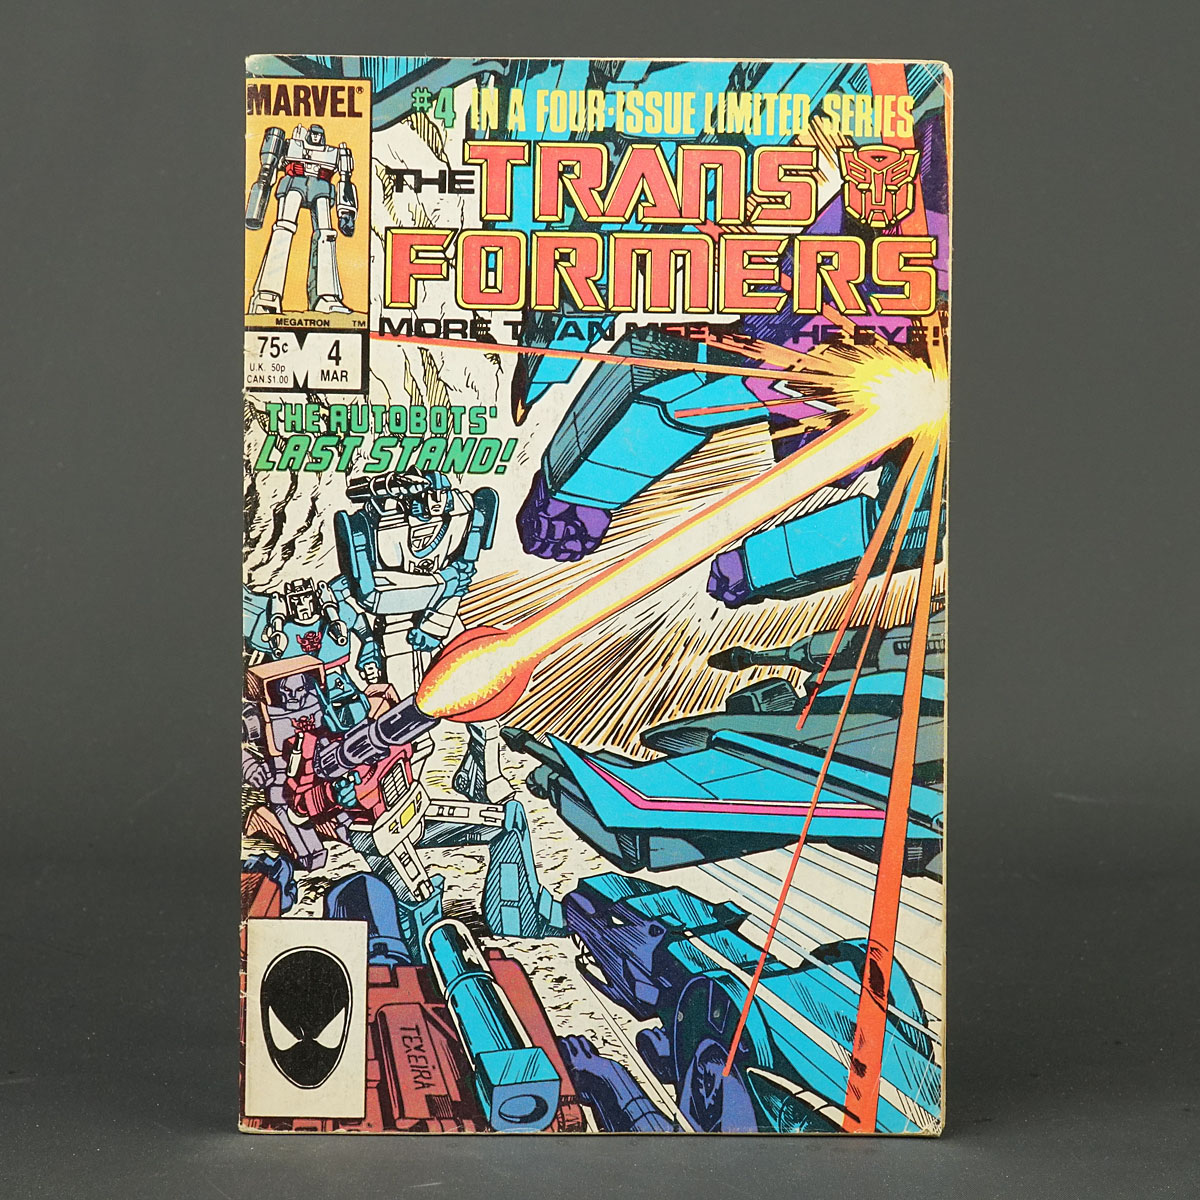 THE TRANSFORMERS #4 1st ptg Marvel Comics 1985 (CA) Texeira (W) Salicrup 230915N